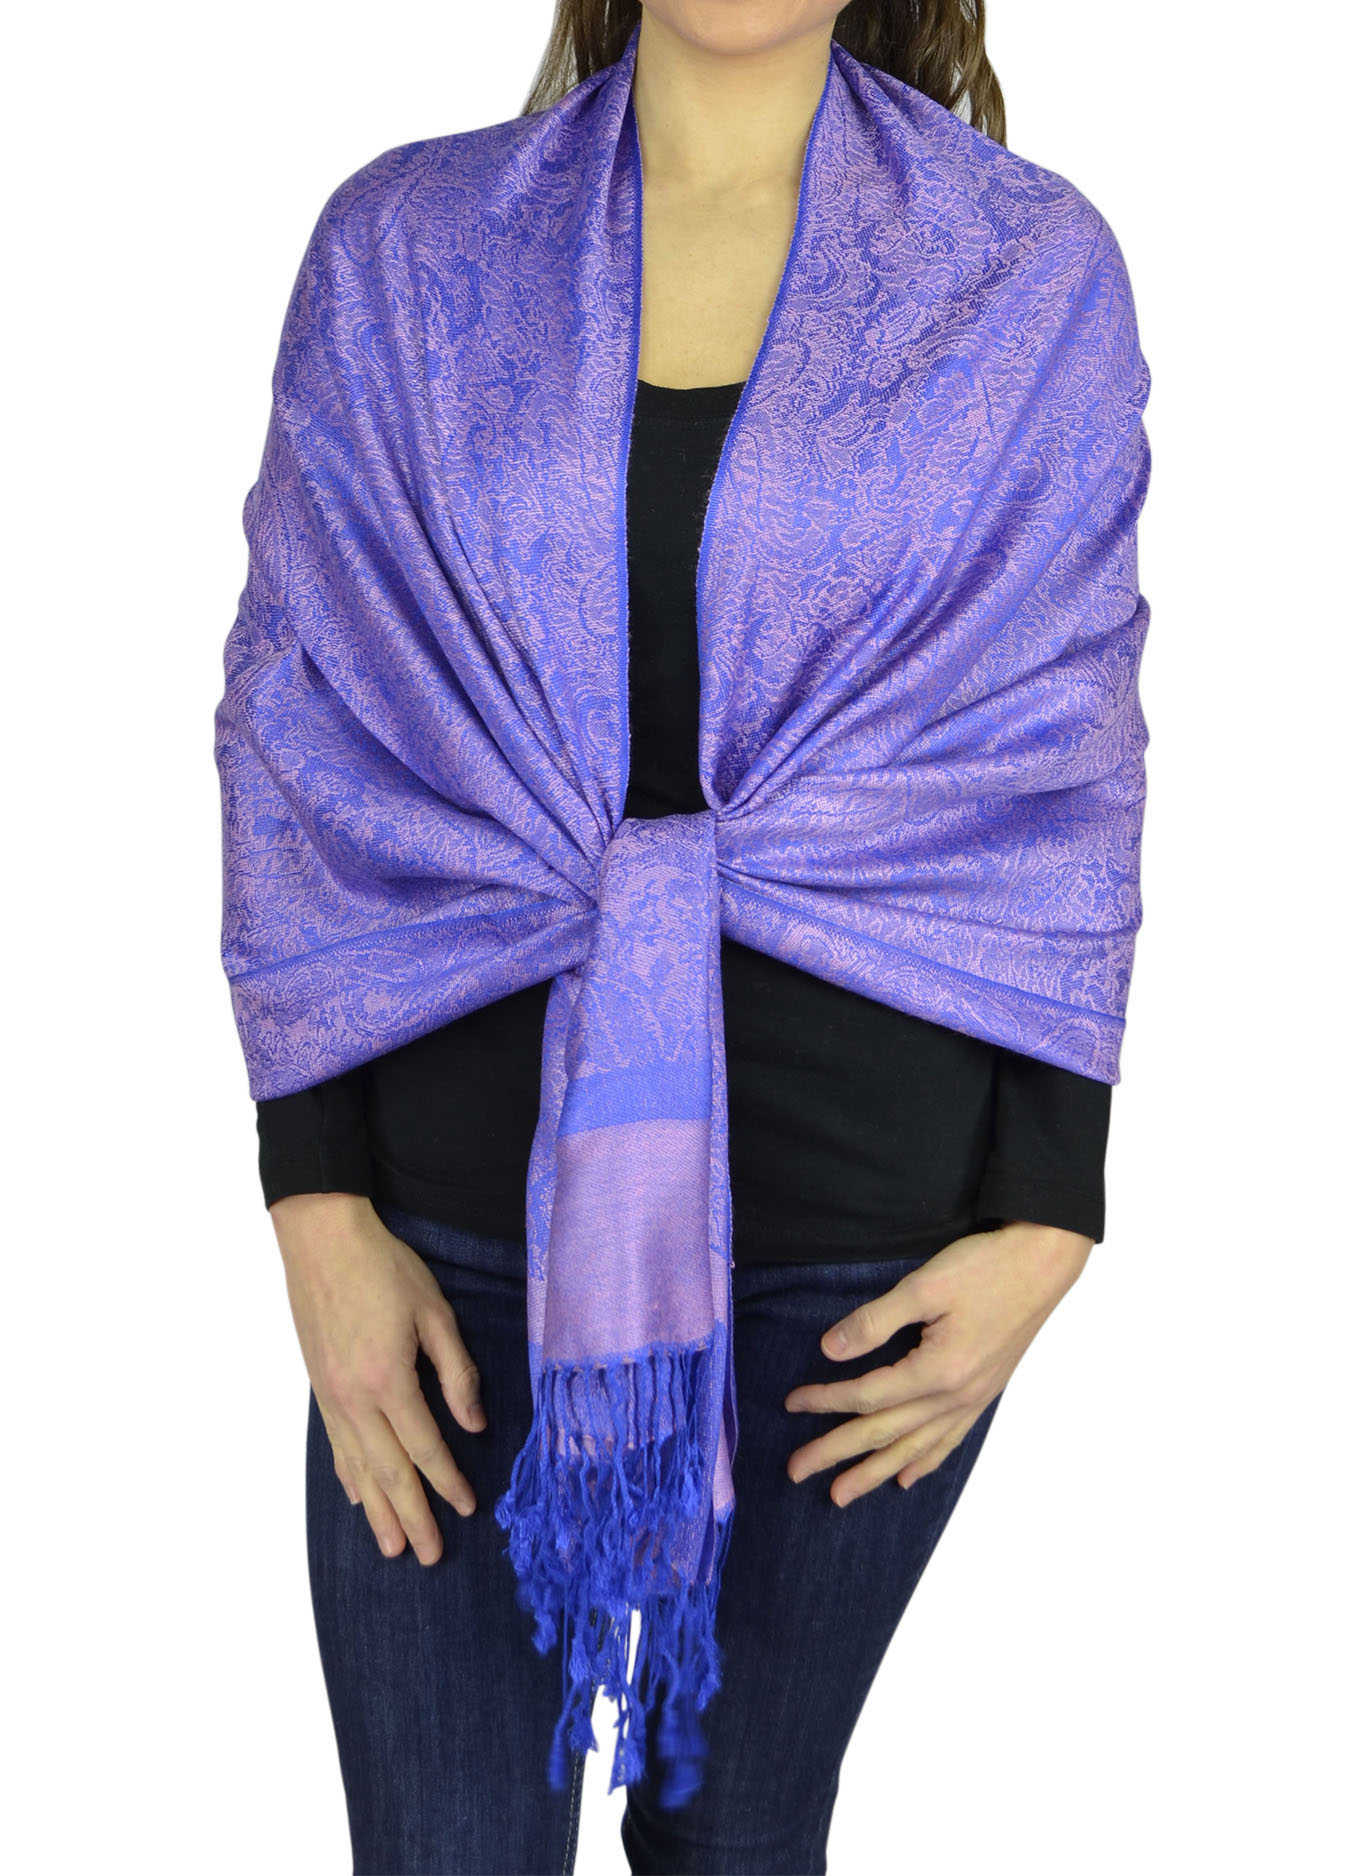 Belle Donne Jacquard Paisley Pashmina Soft Elegant Scarves Wrap Shawl Stole - RoyalBlue